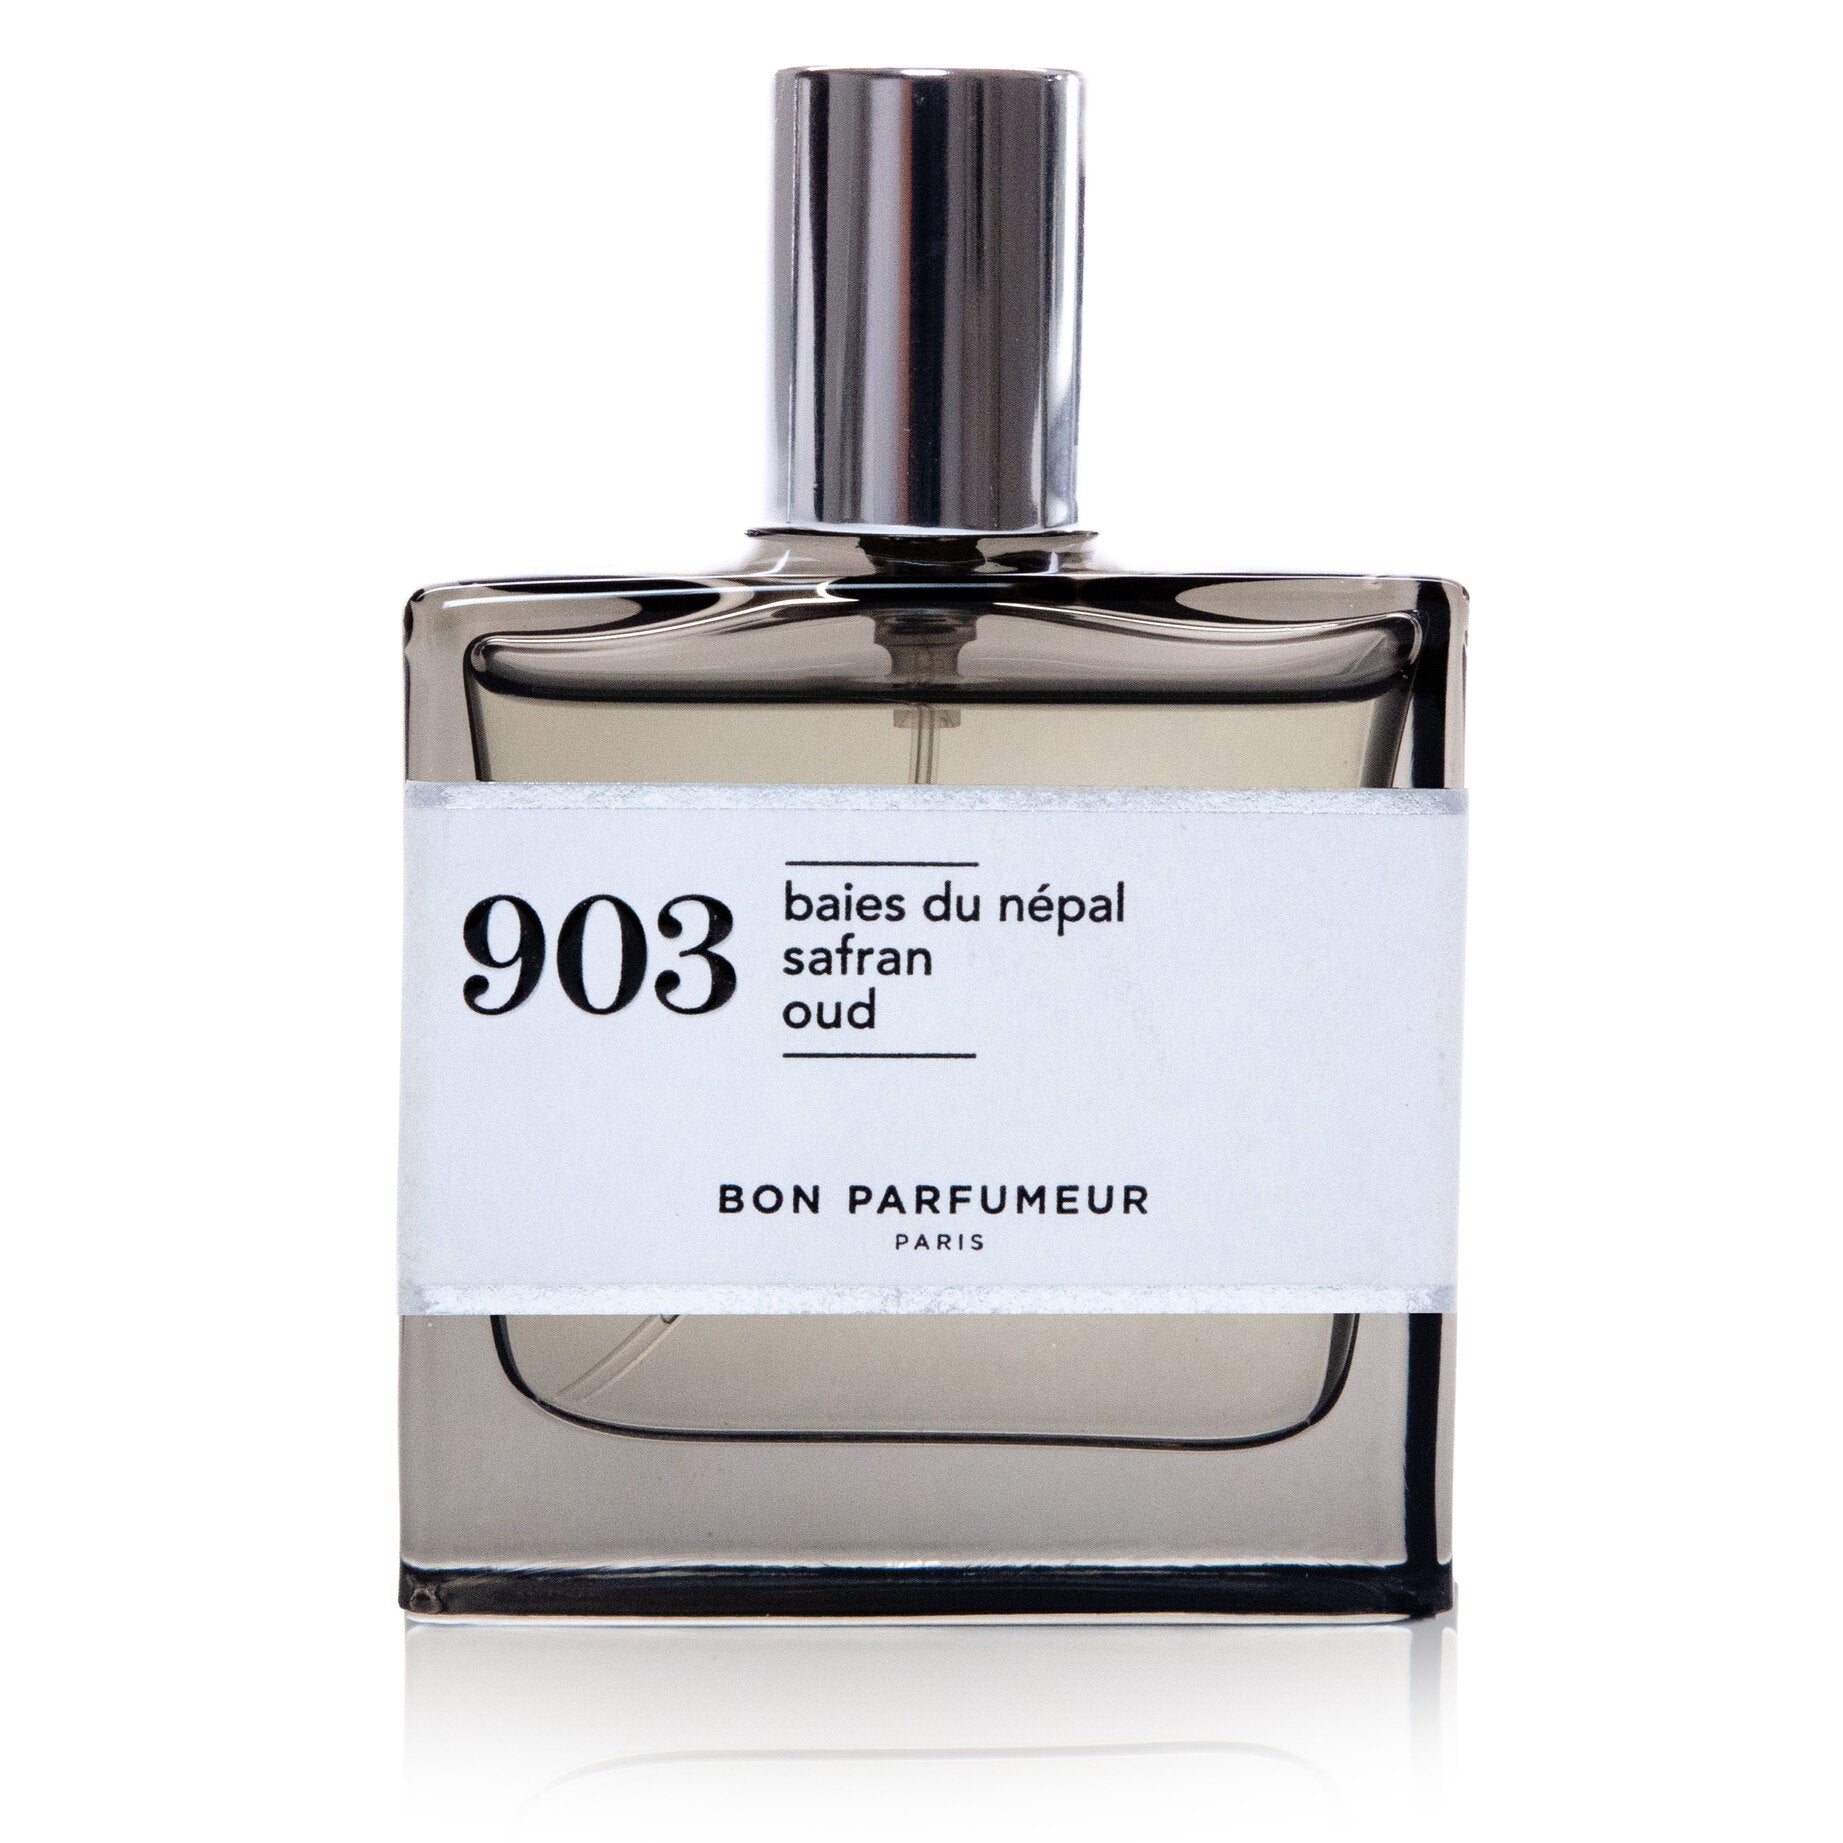 Bon Parfumeur - Les Privés 903 - Danae Profumeria